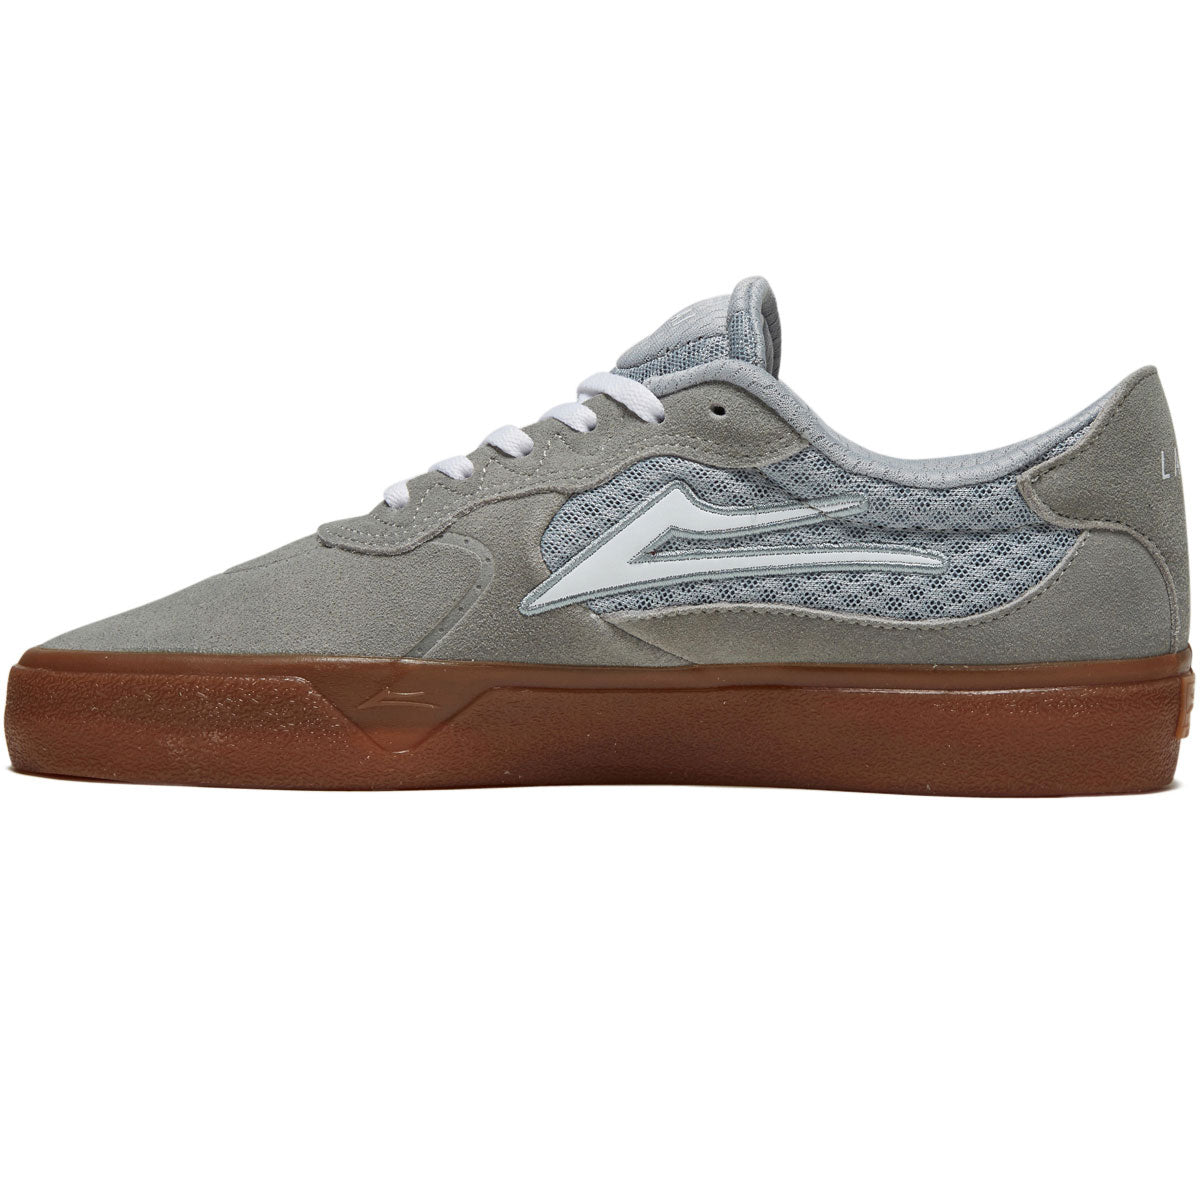 Lakai Essex Shoes - Light Grey/Gum Suede image 2